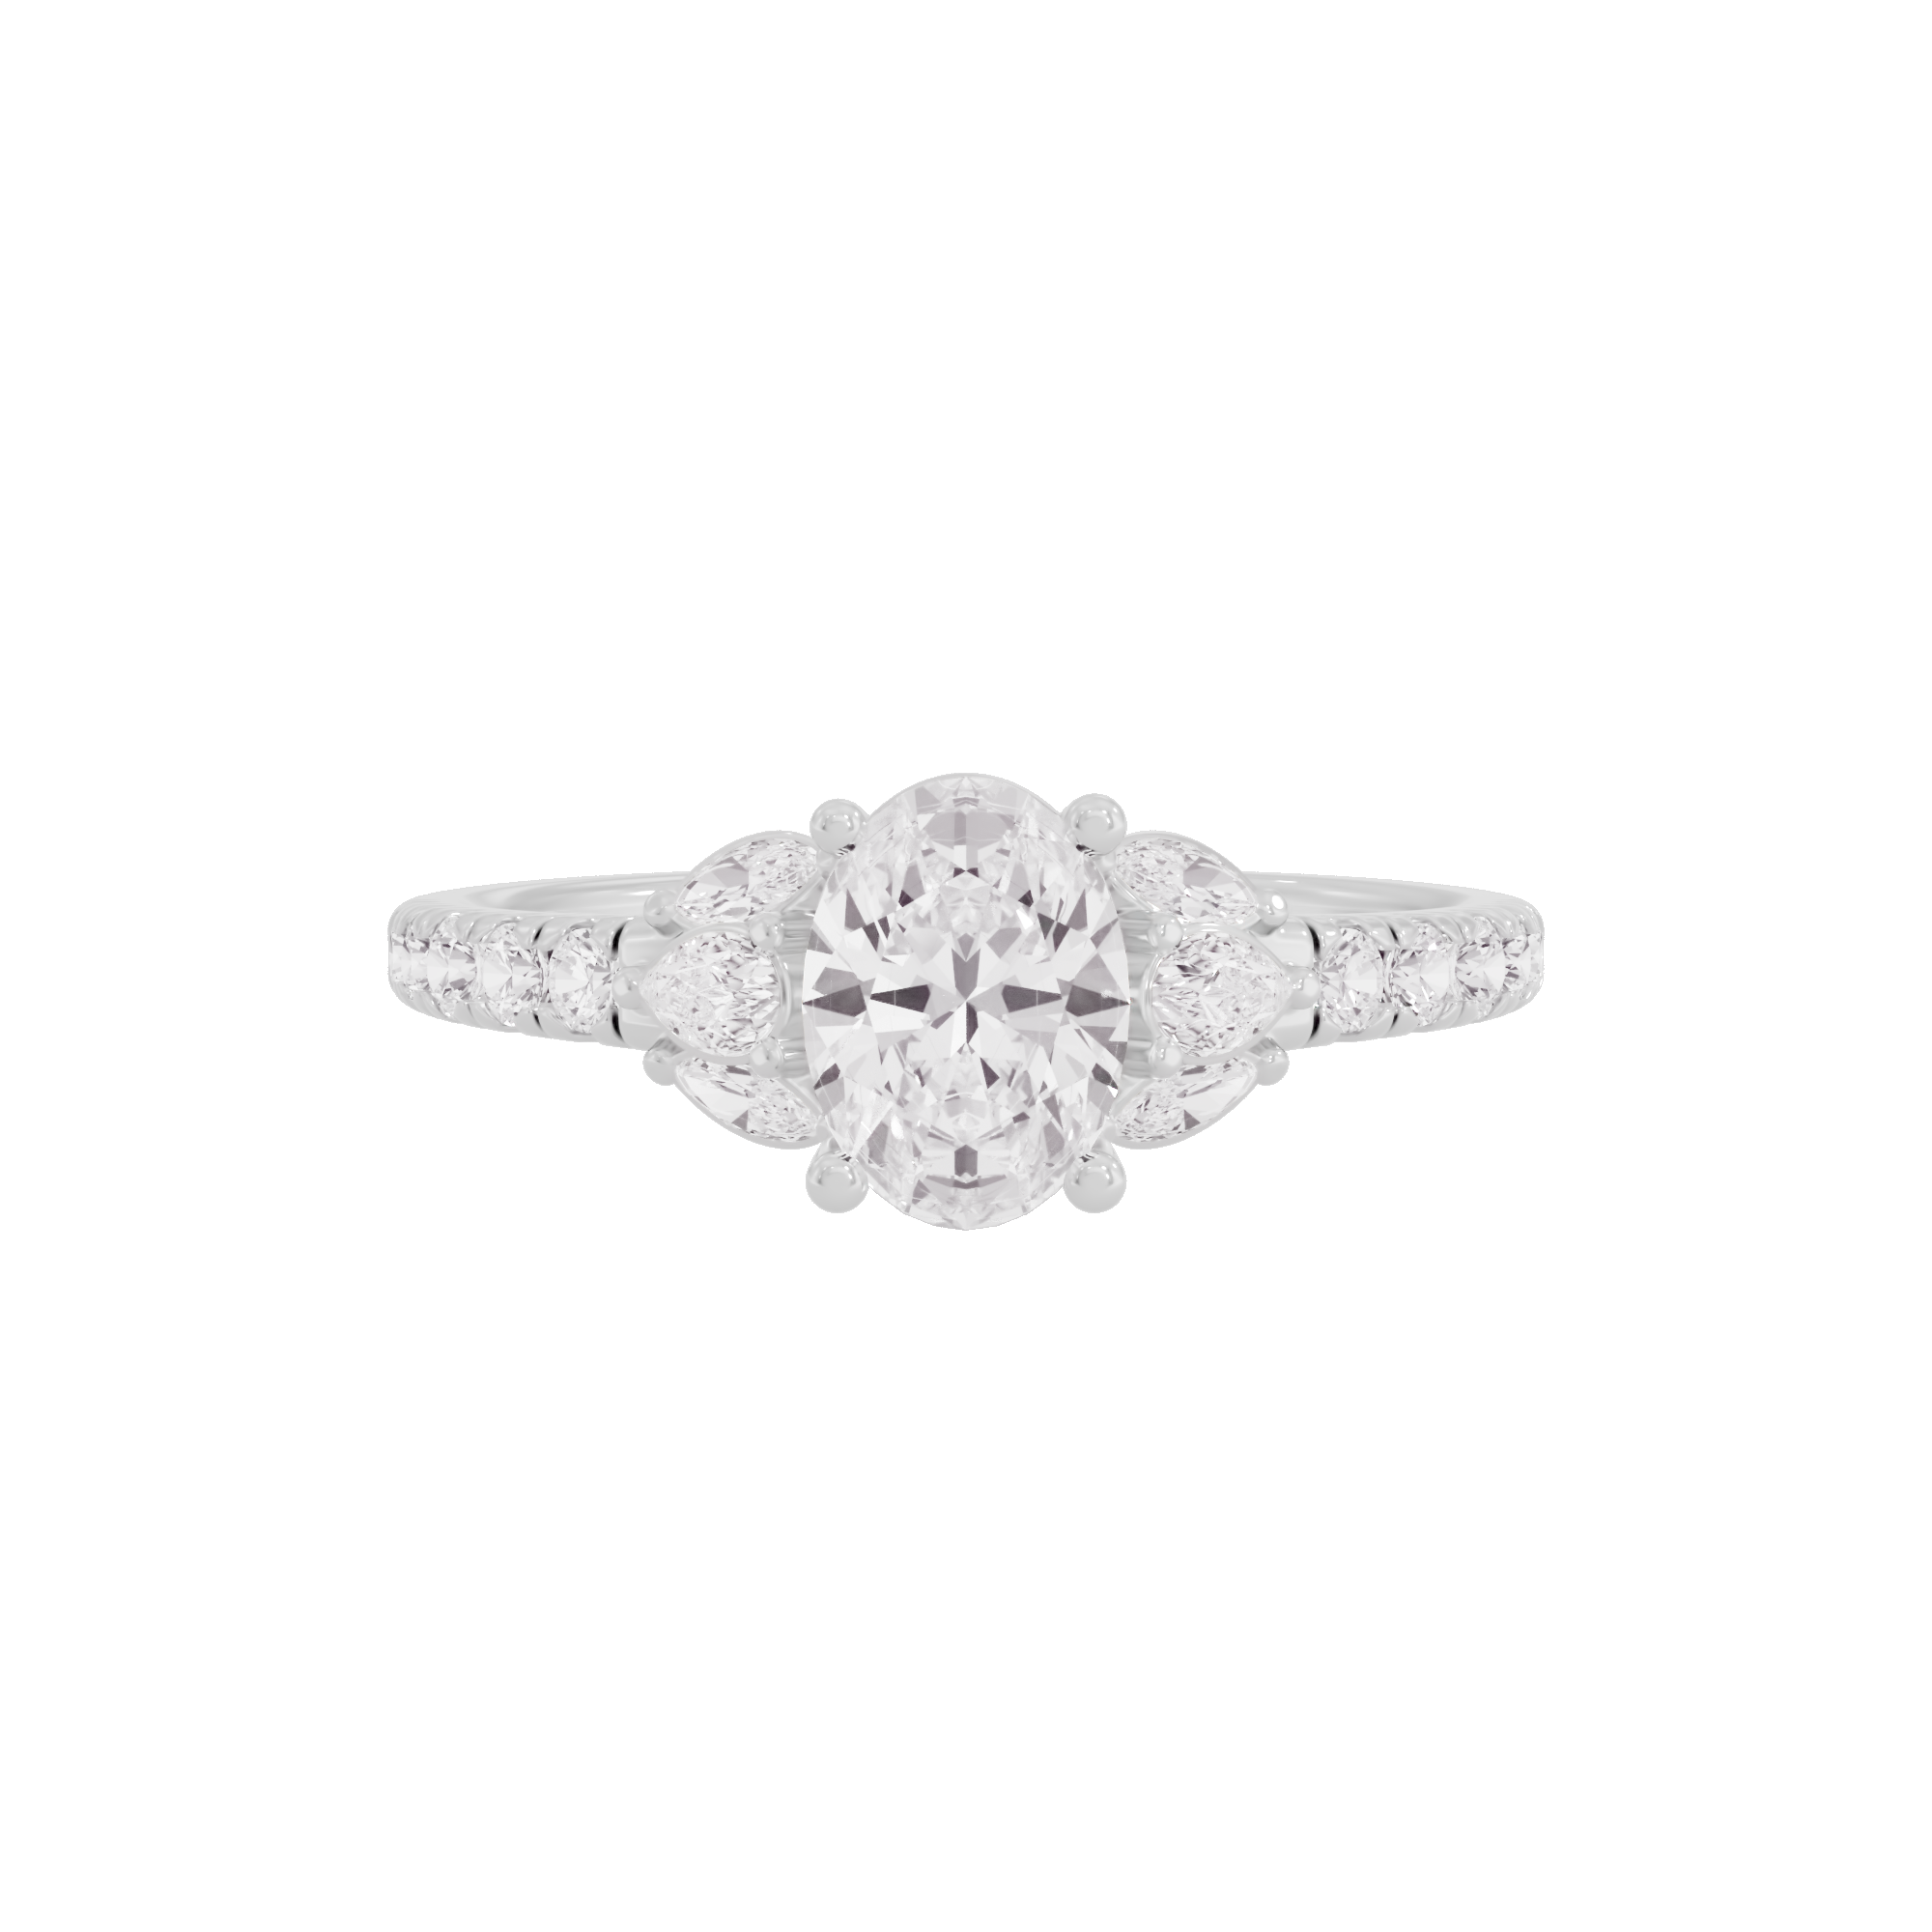 Delicate Bloom Diamond Ring